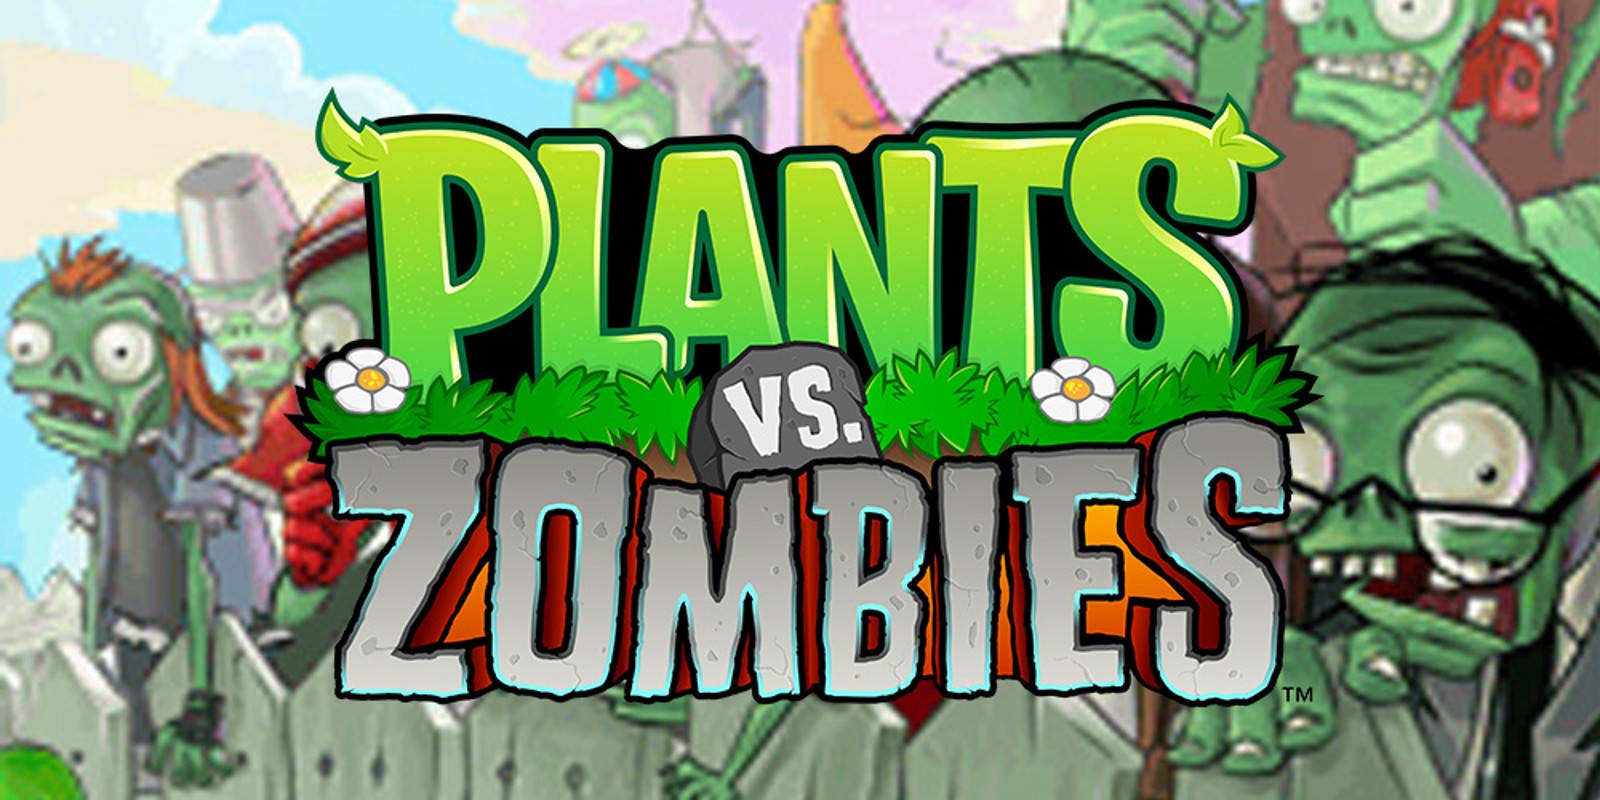 watch plants vs zombies videos